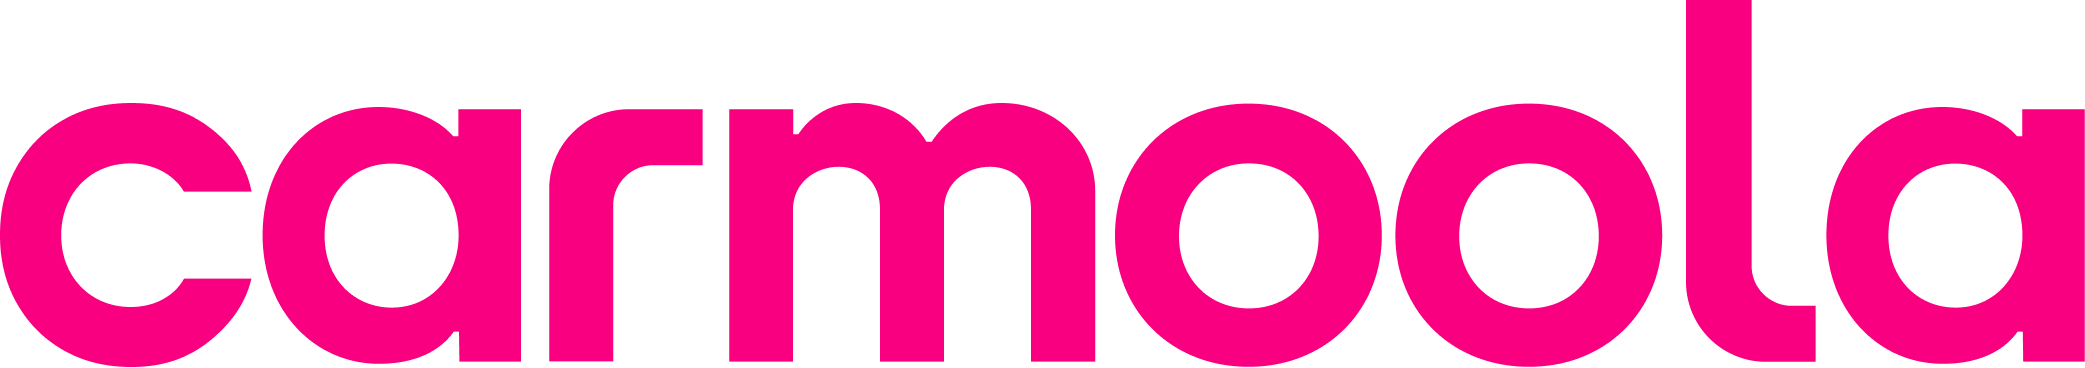 Carmoola-Logo